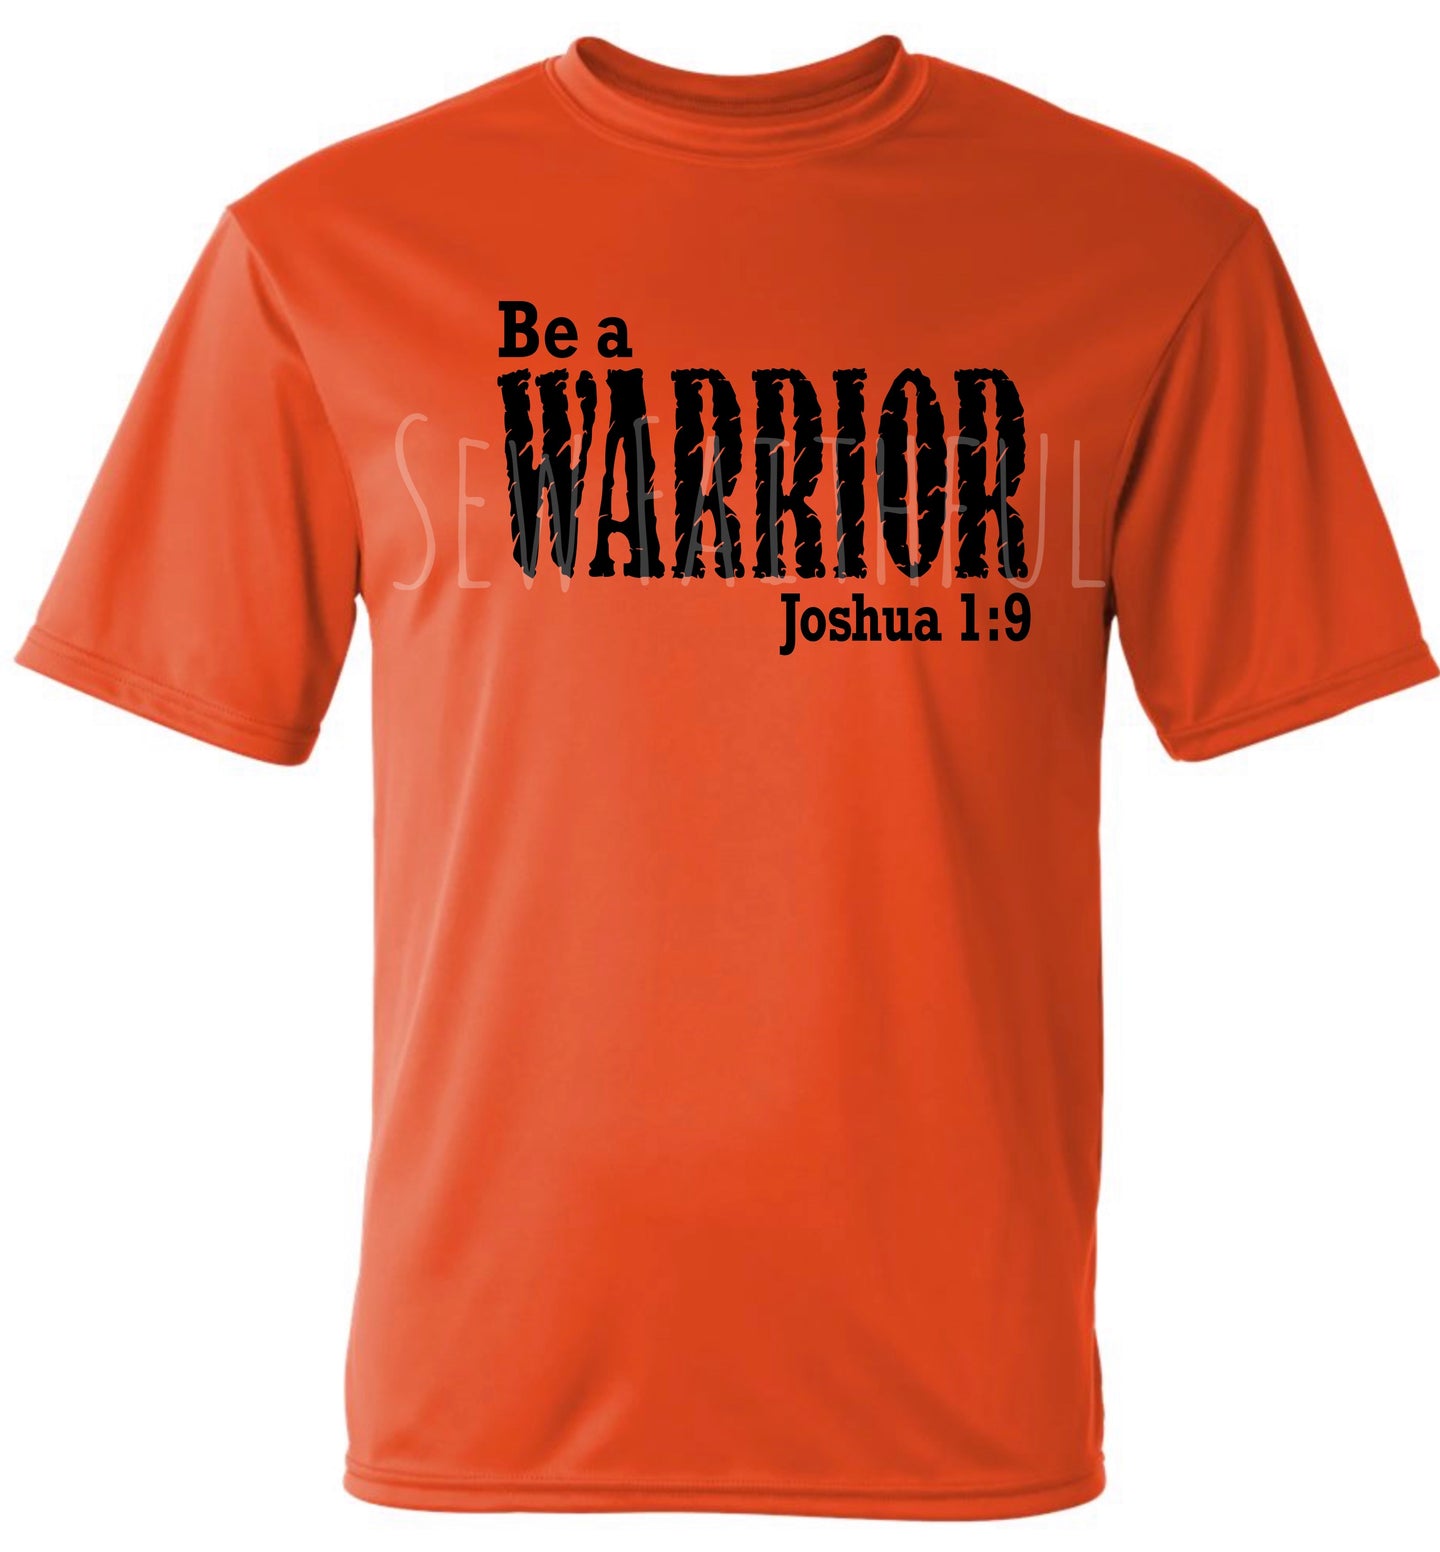 Be a Warrior - Joshua 1:9